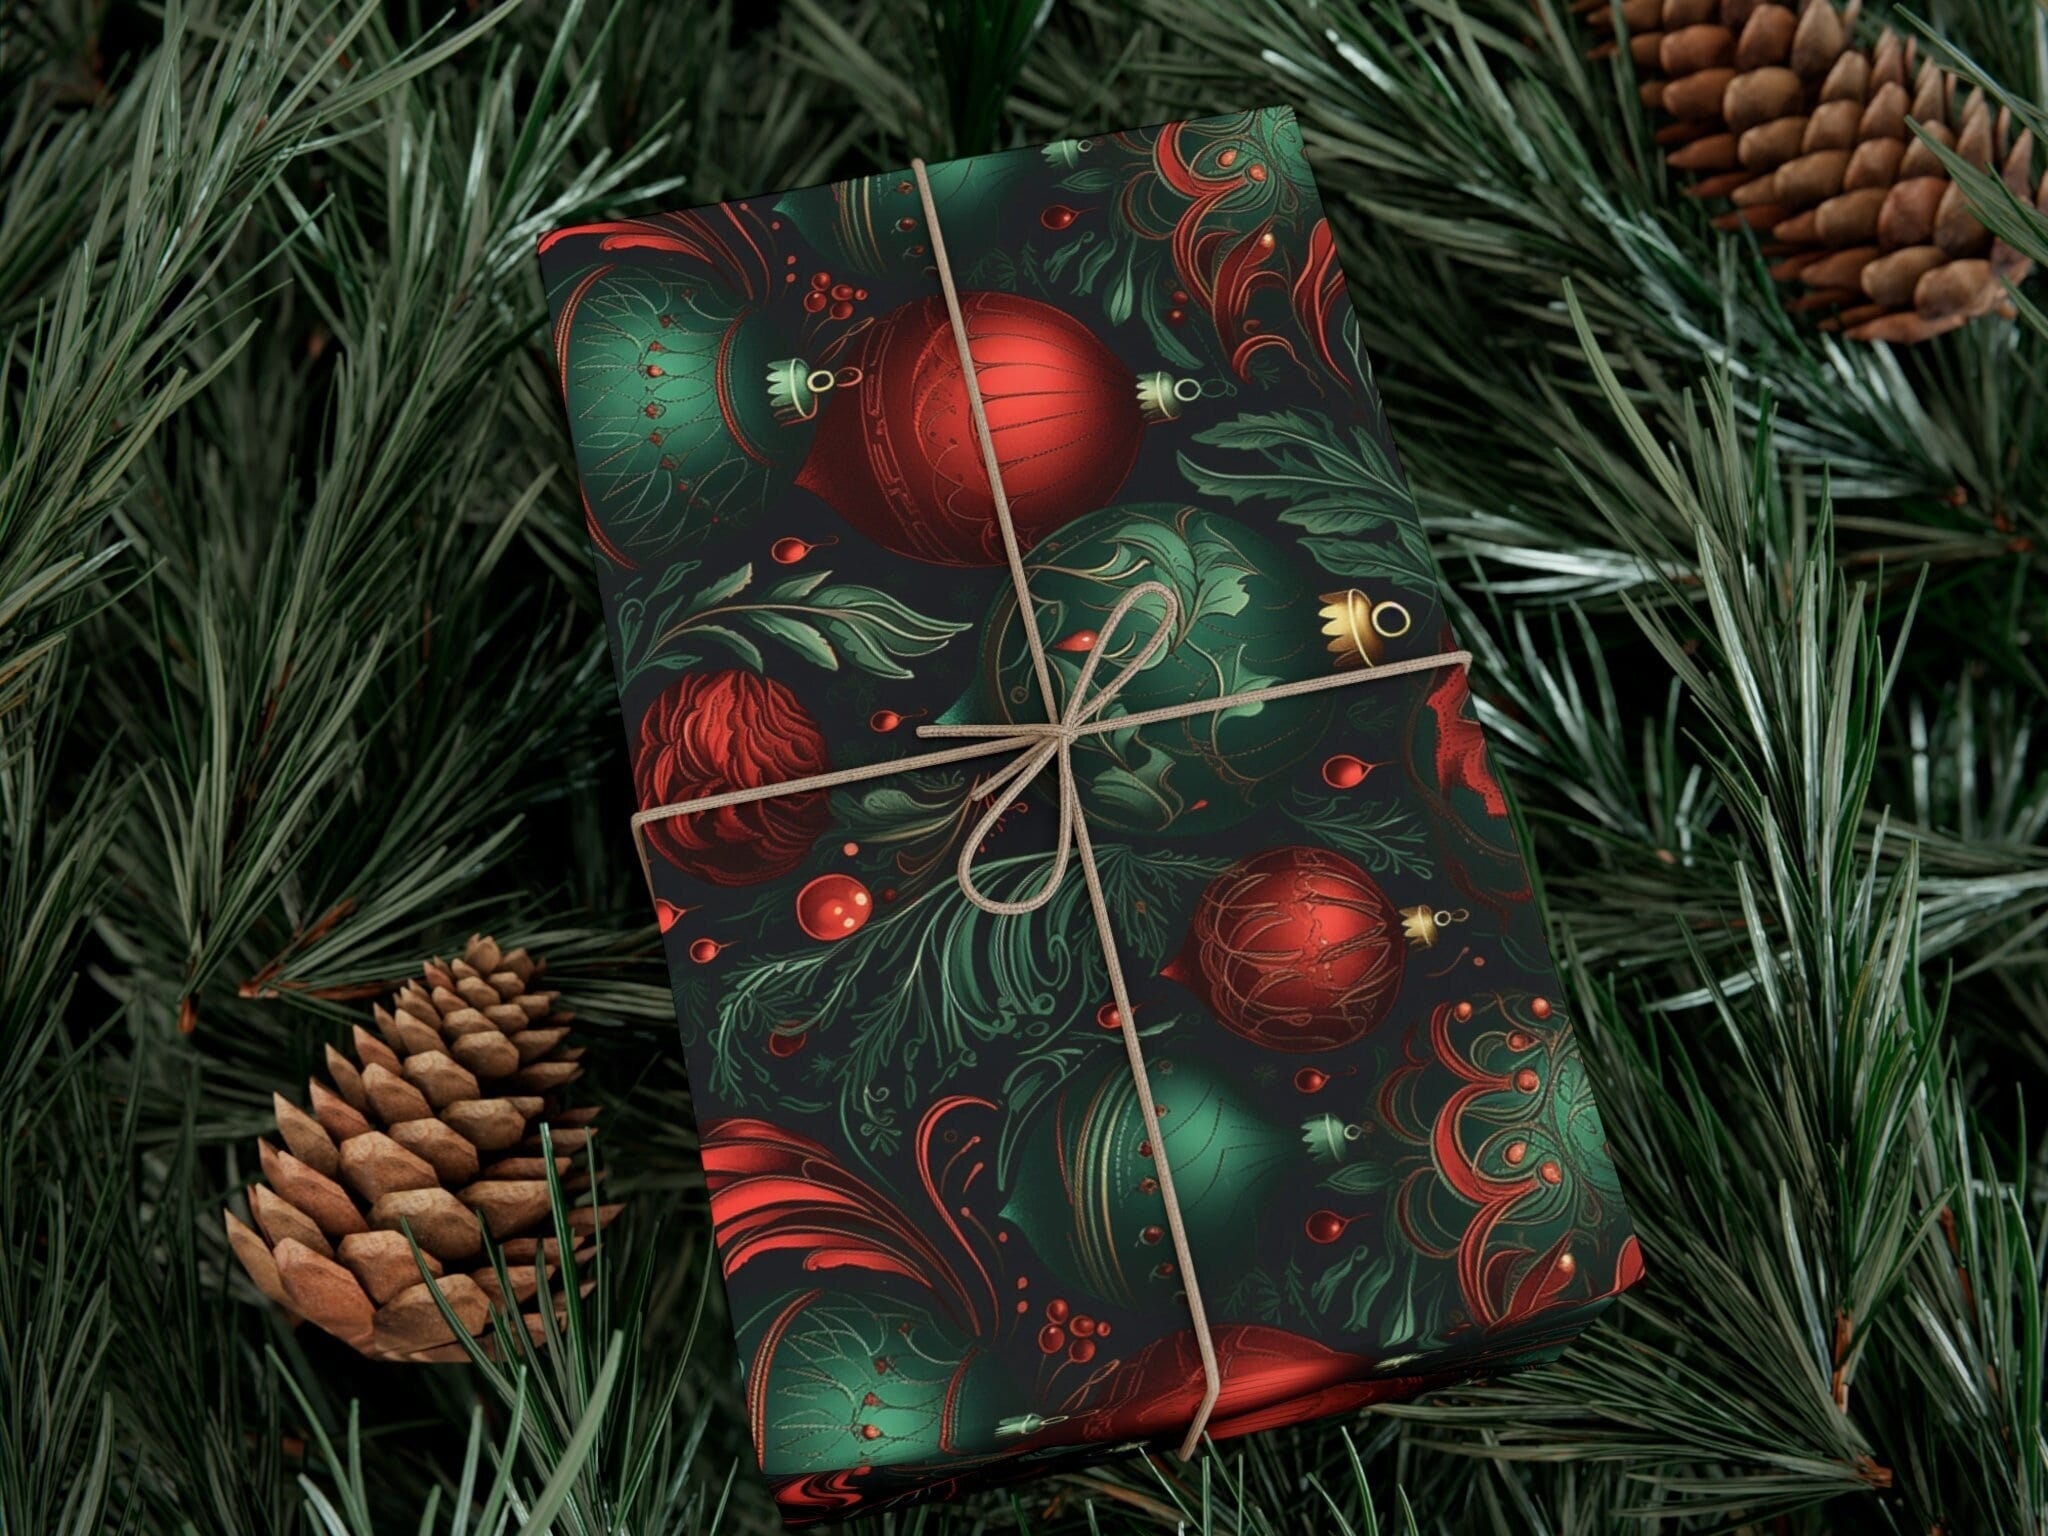 Gingham Green Wrapping Paper, Autumn Gift Wrap, Christmas Wrapping Paper,  Dark Green, Gingham Stationary, Farmhouse, Minimalist 